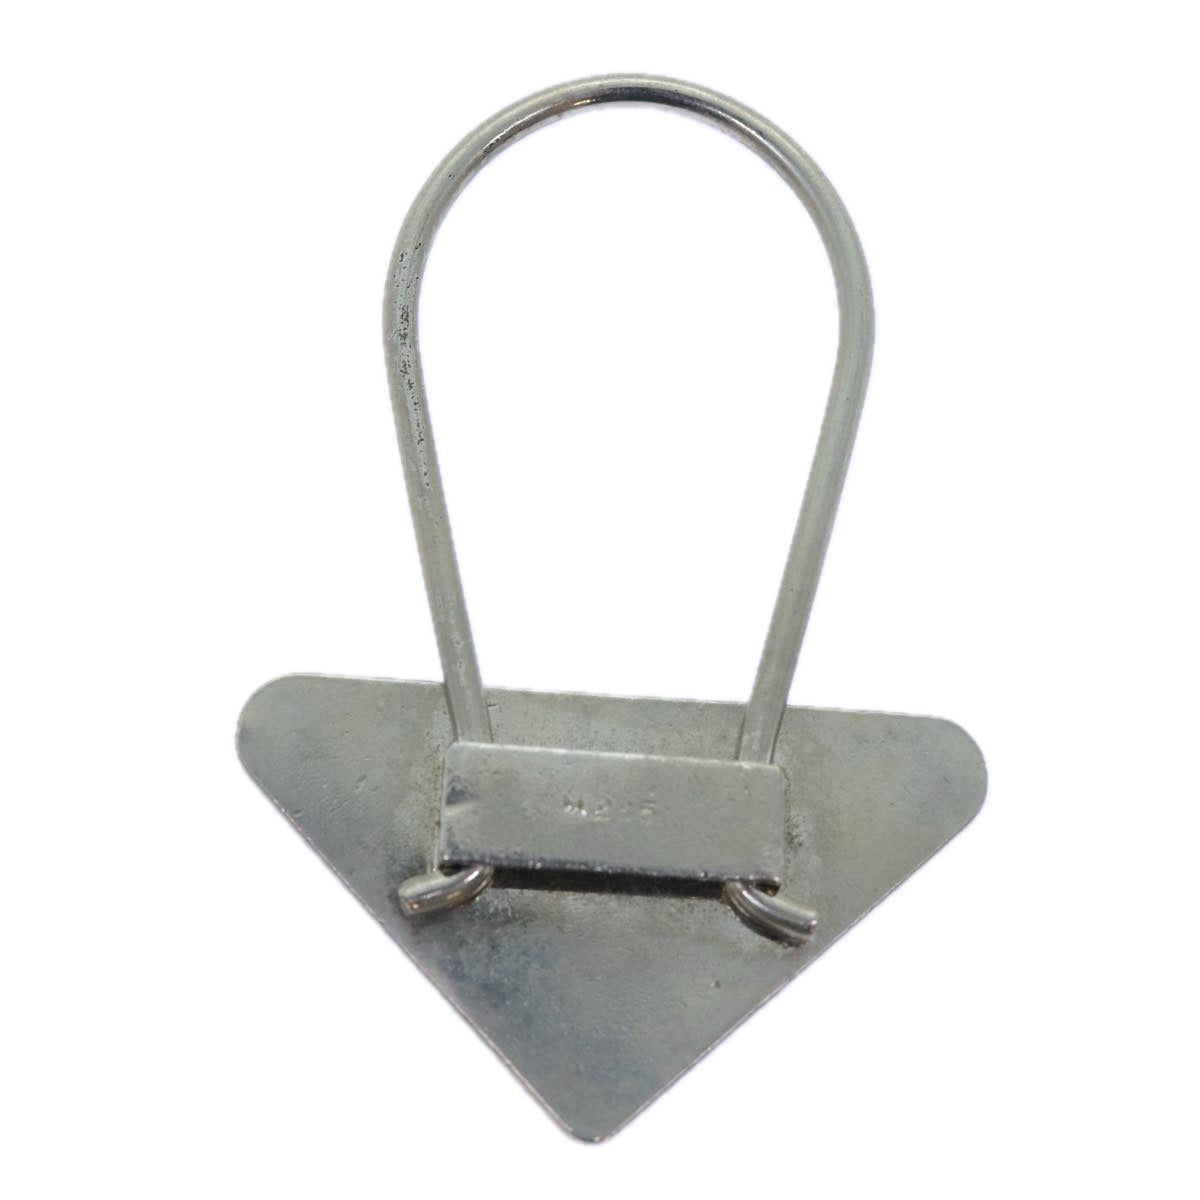 PRADA Triangle Plate Key Ring metal Black Auth am6073